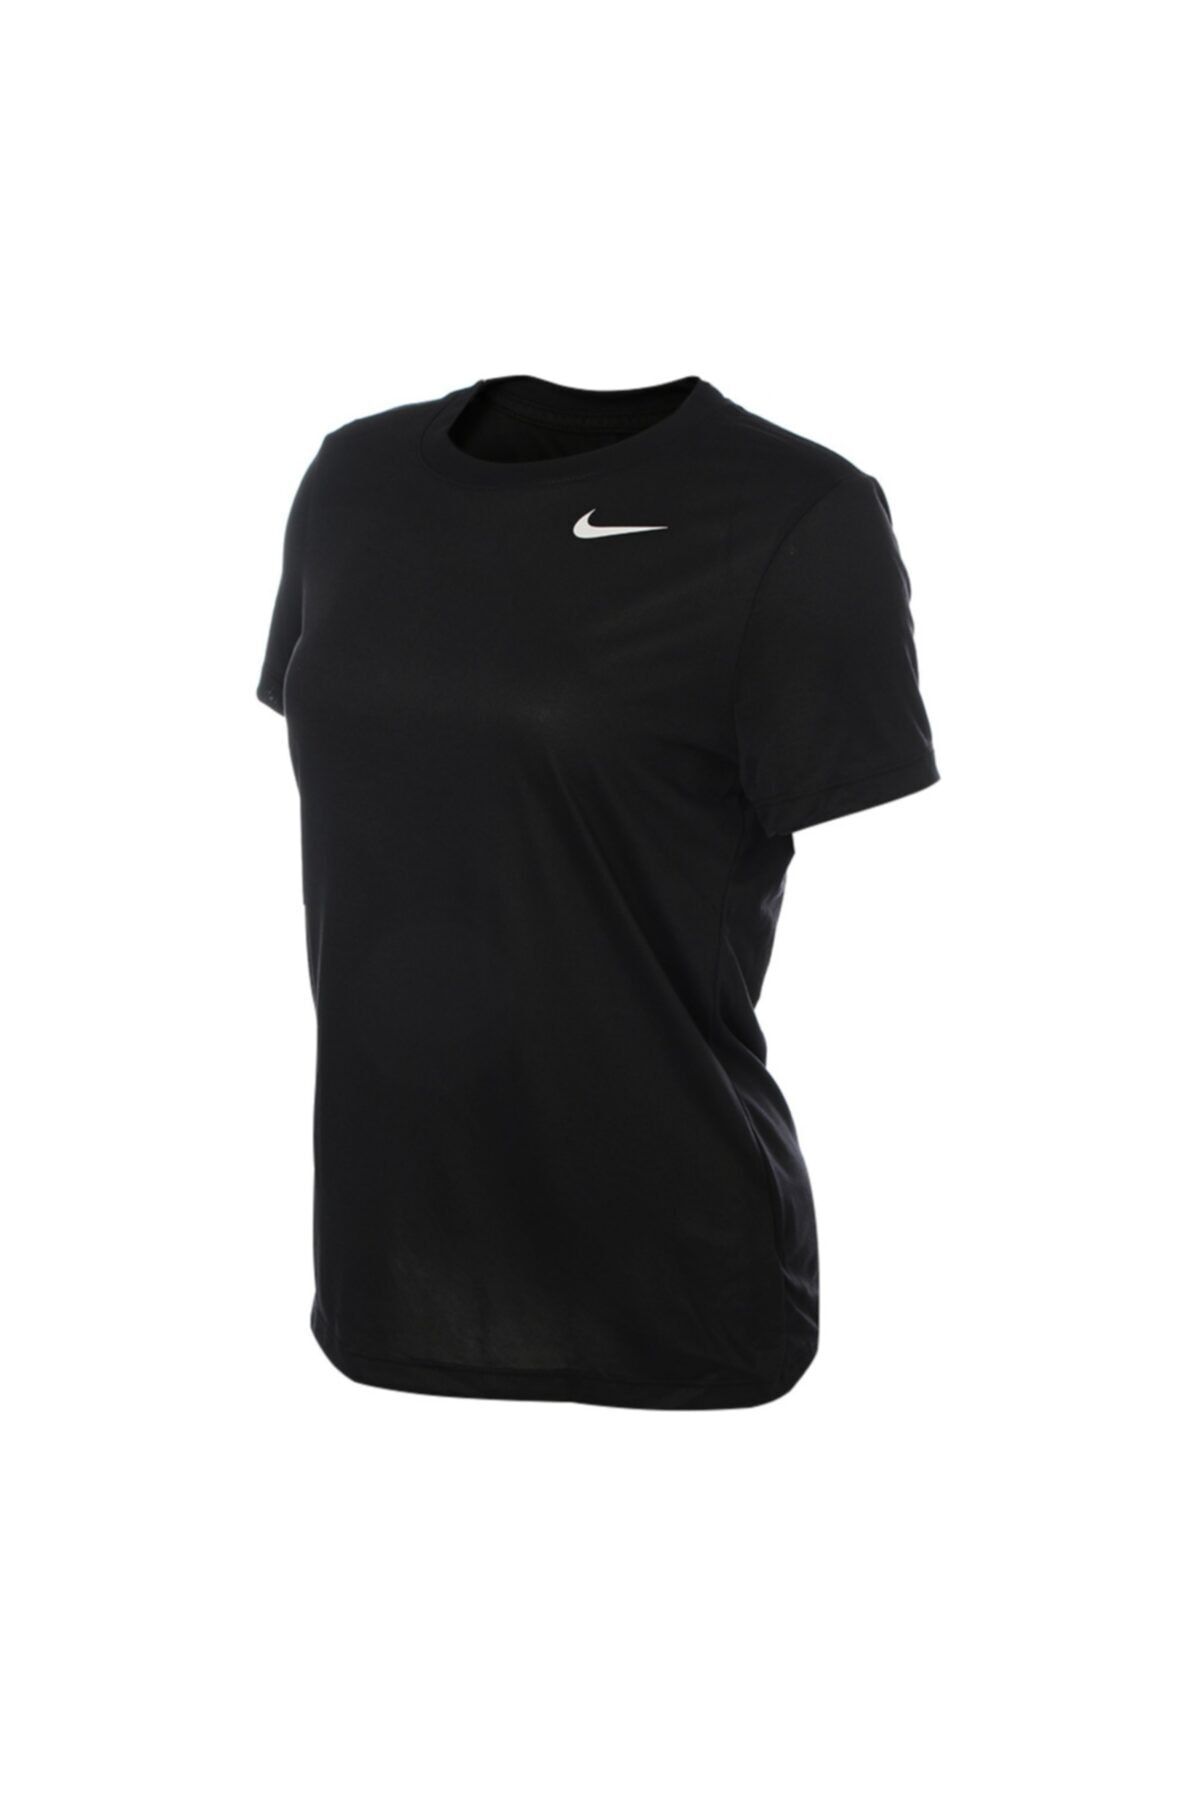 Nike Aq3210-010 W Nk Dry Leg Tee Crew Kadın T-shirt